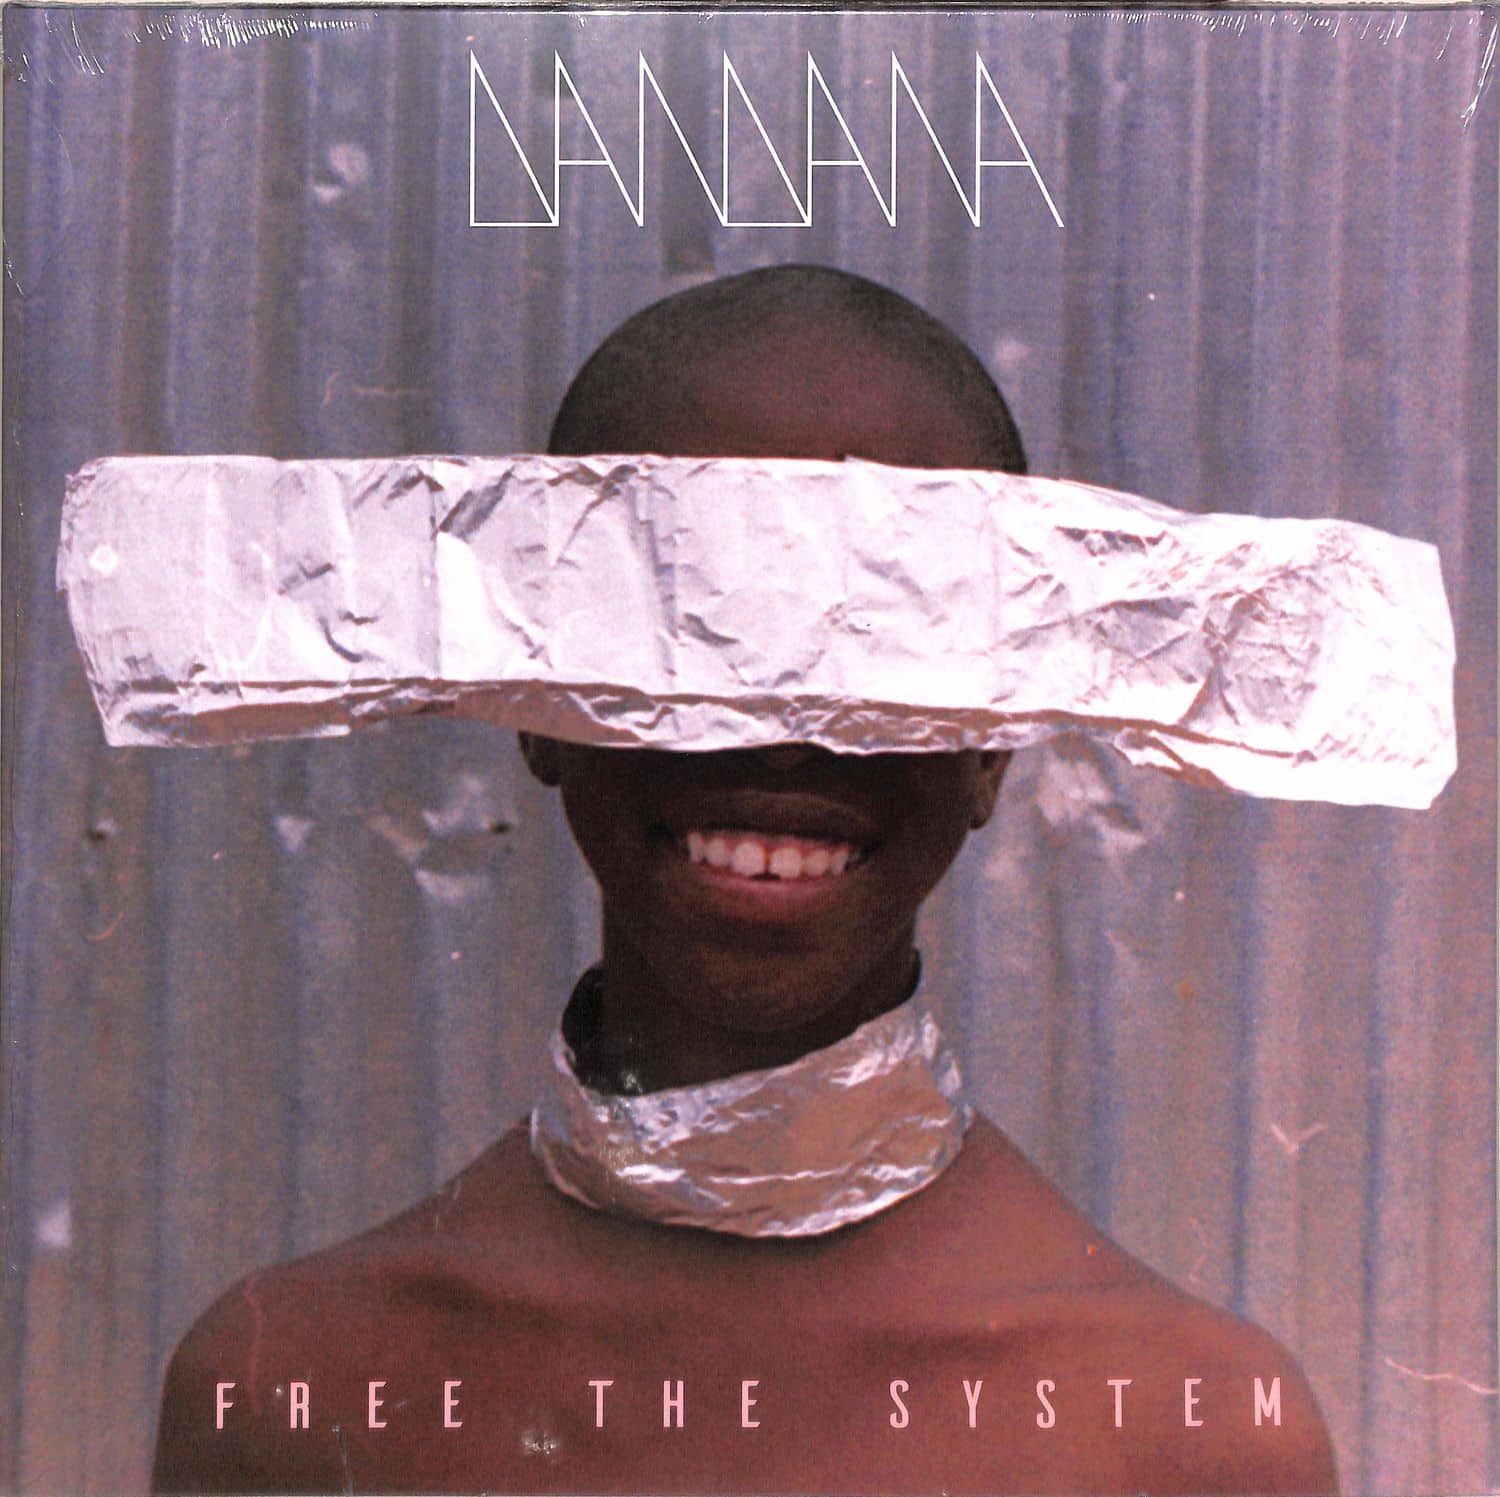 Dandana - FREE THE SYSTEM